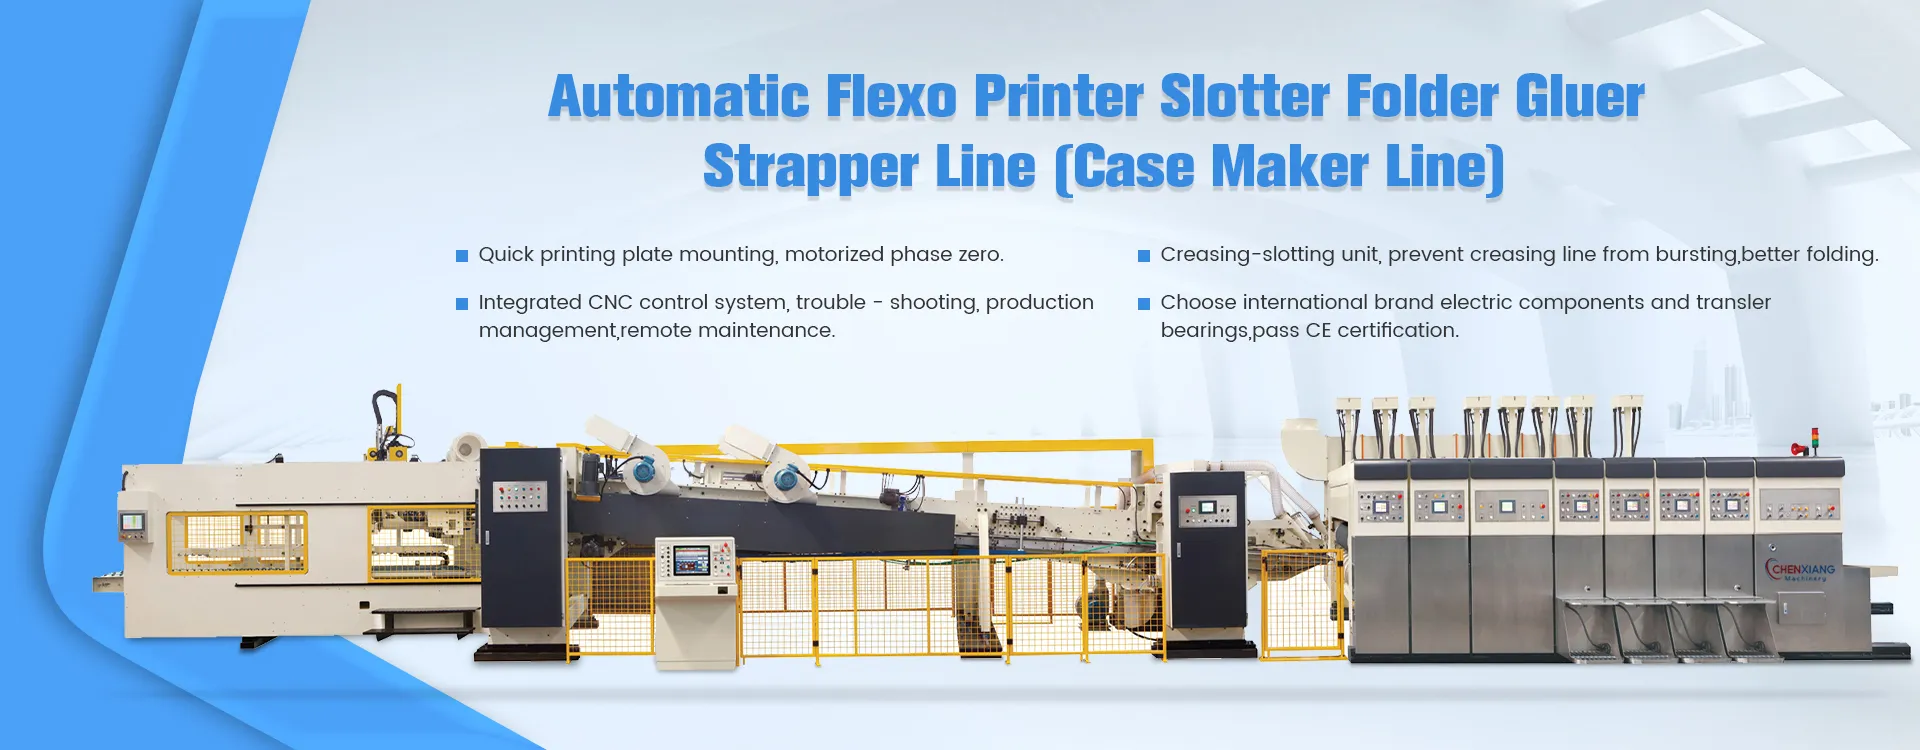 Impresora flexográfica automática, ranuradora, plegadora, encoladora, flejadora, línea [Case Maker Line]